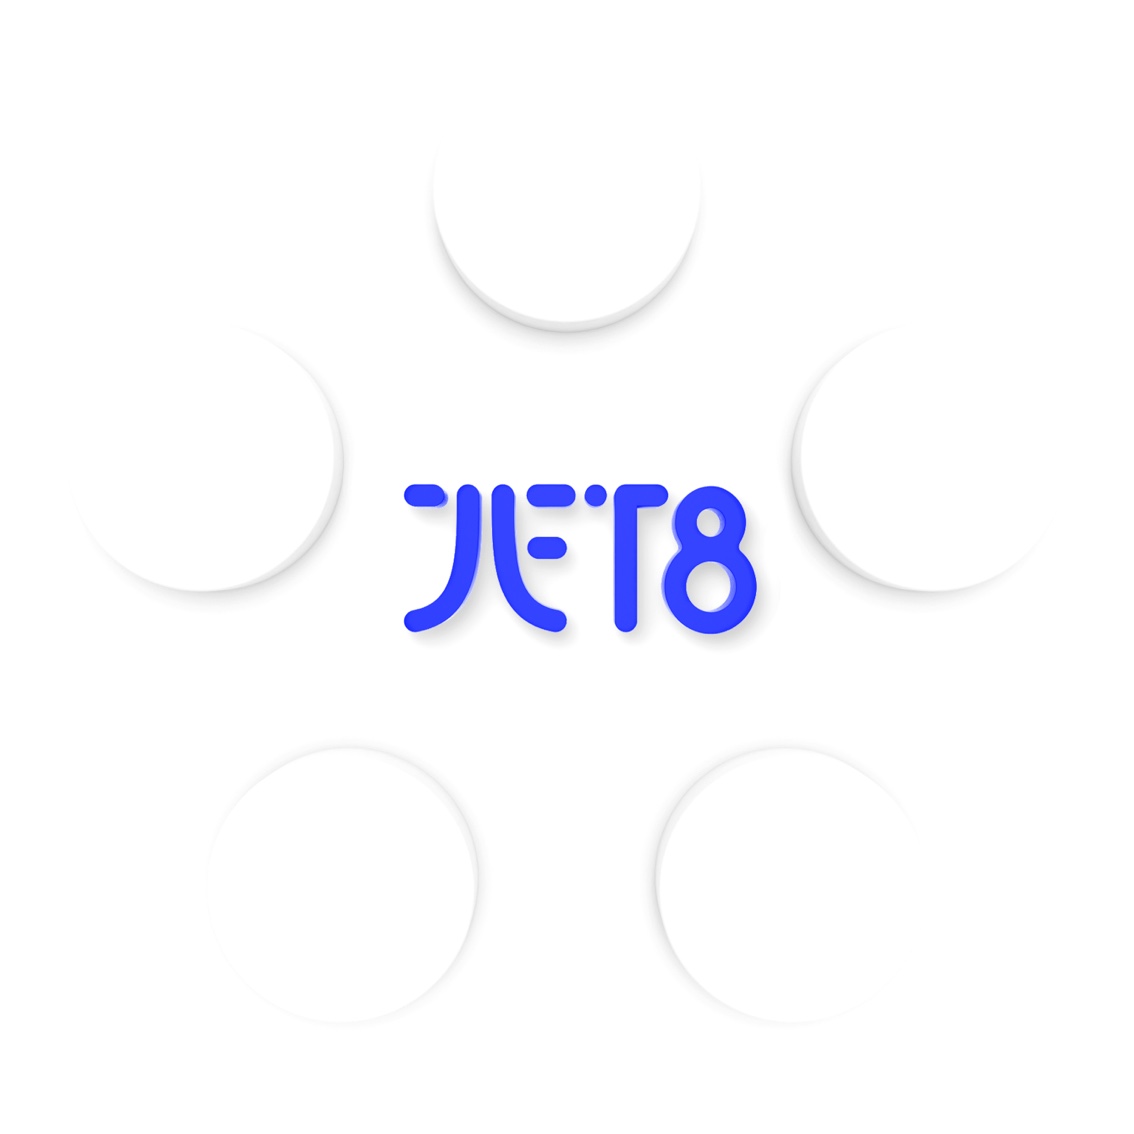 Jet8 Connectivity